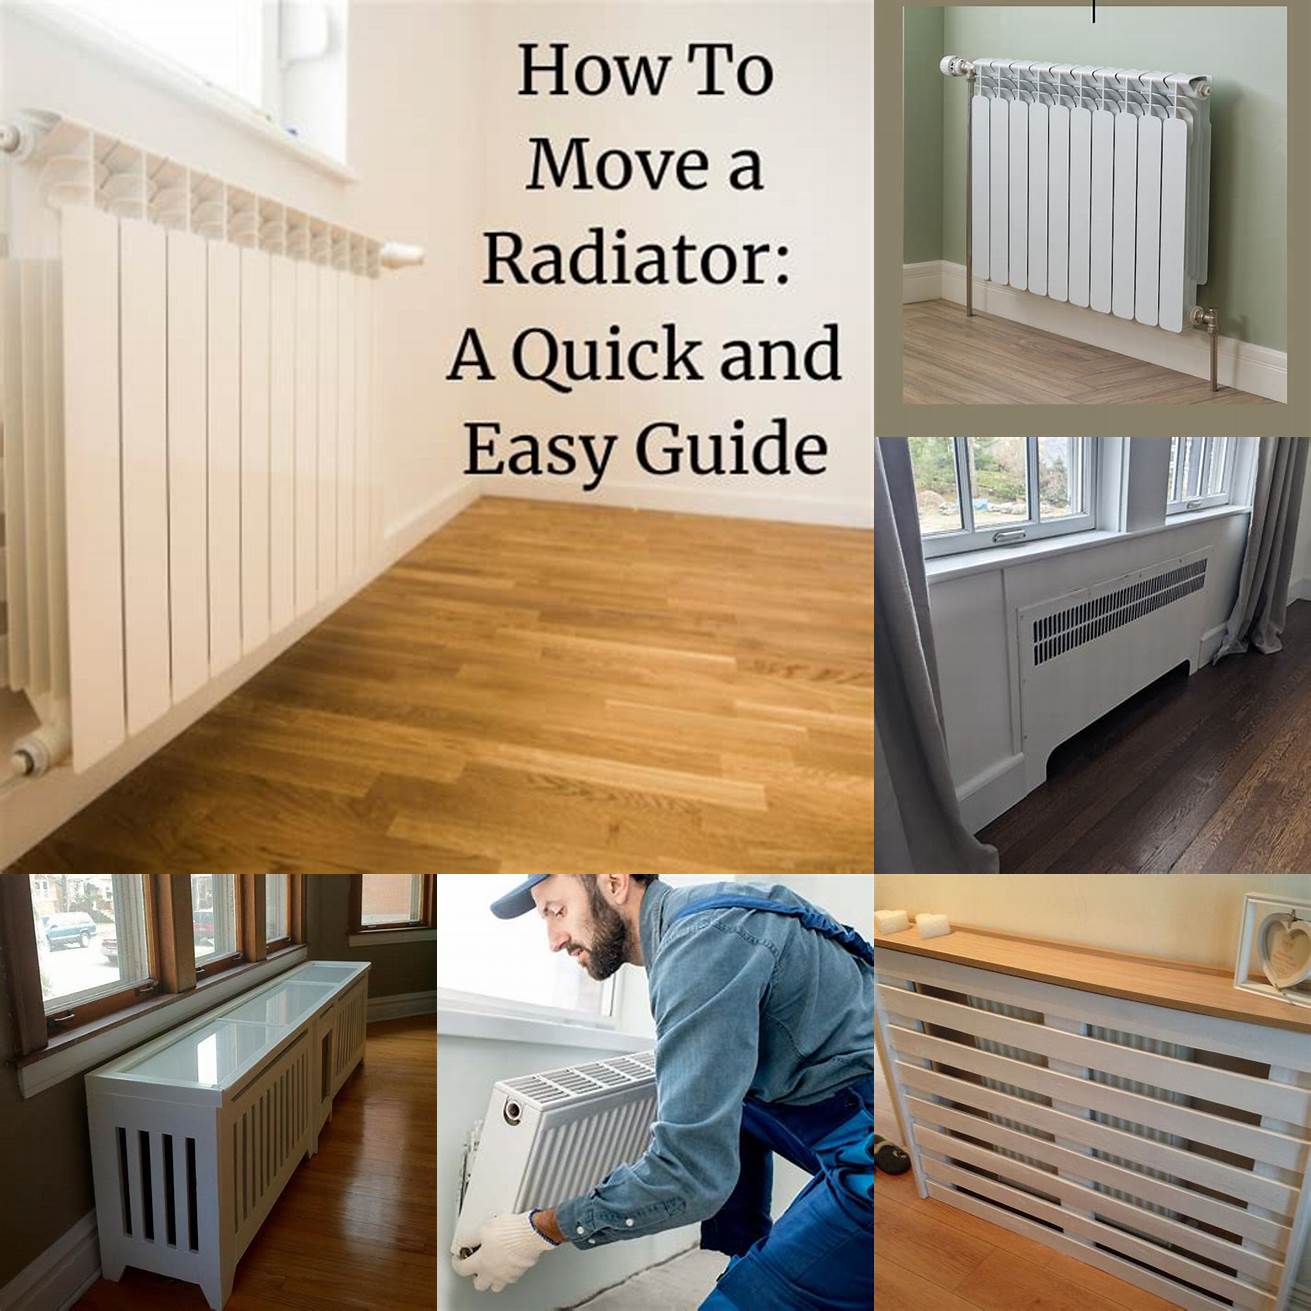 Move away from radiators